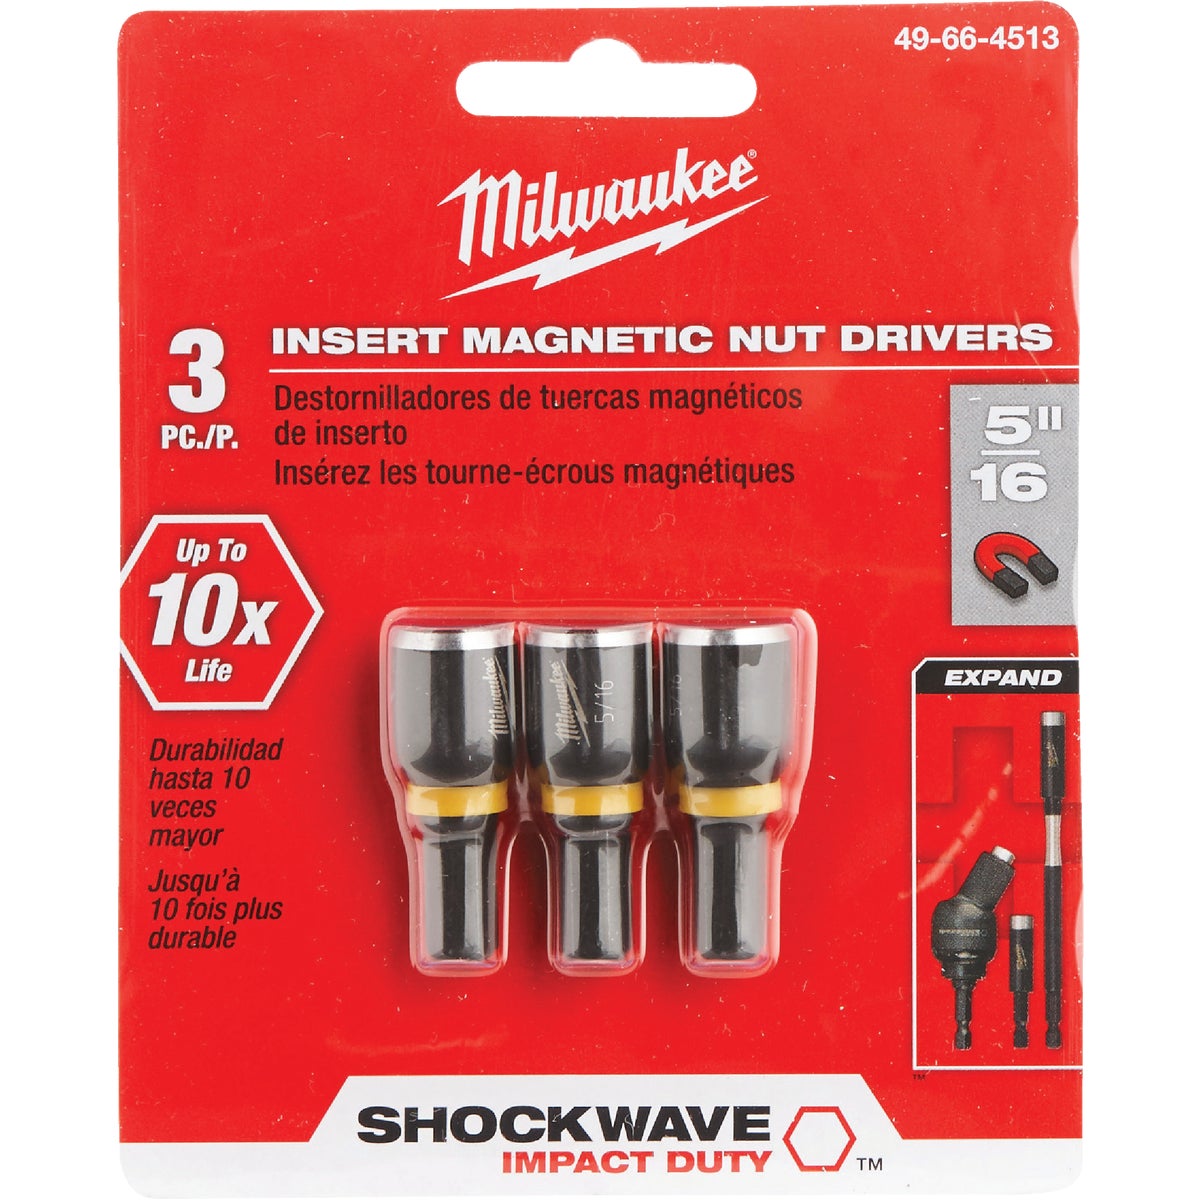 Millwaukee SHOCKWAVE 5/16 In. x 1-1/2 In. Insert Impact Nutdriver, (3-Pack)